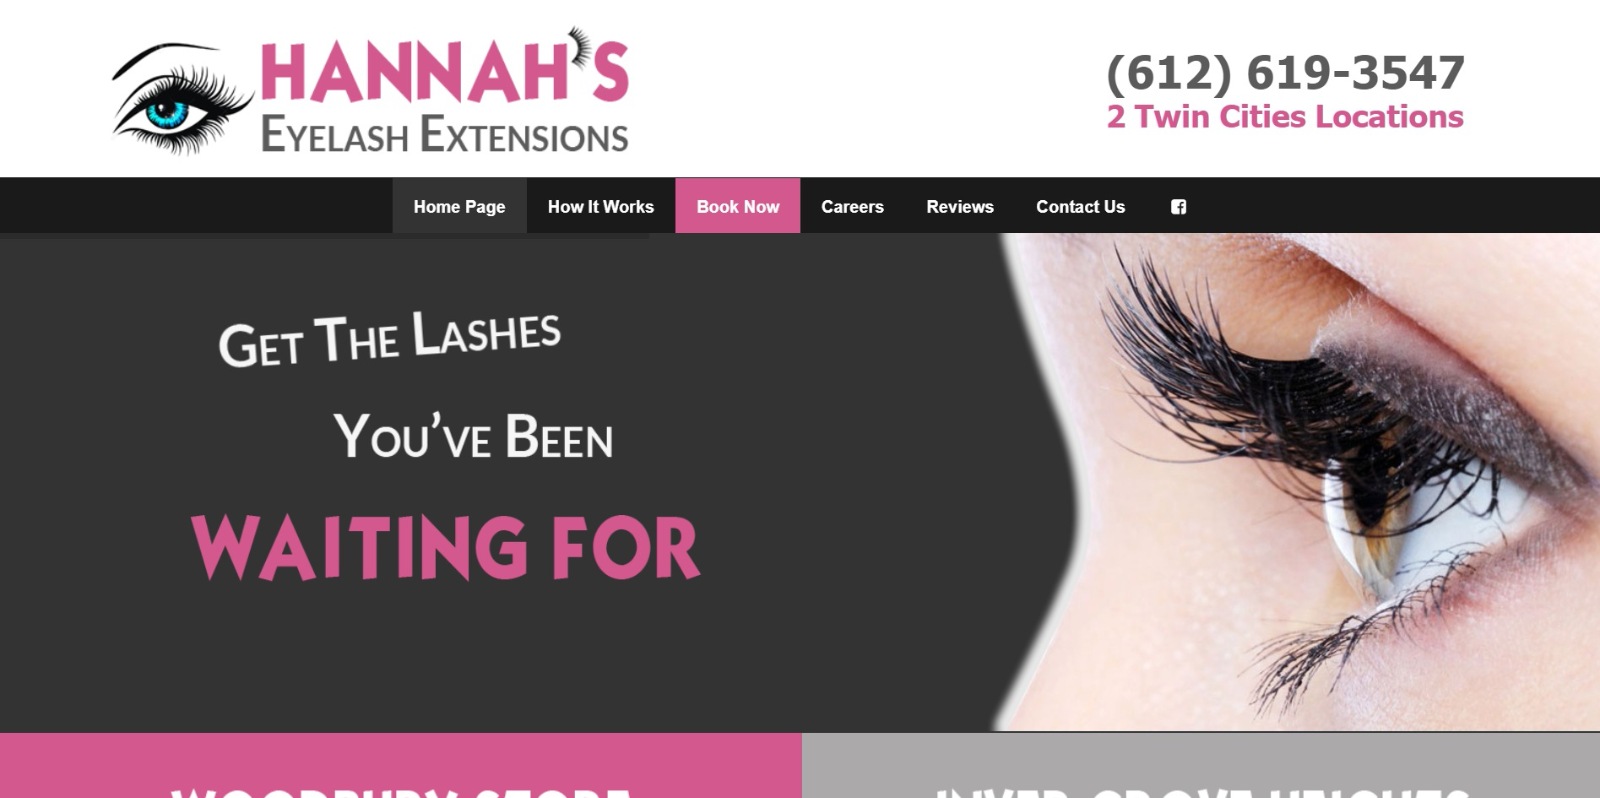 Hannah's Eyelash Extensions